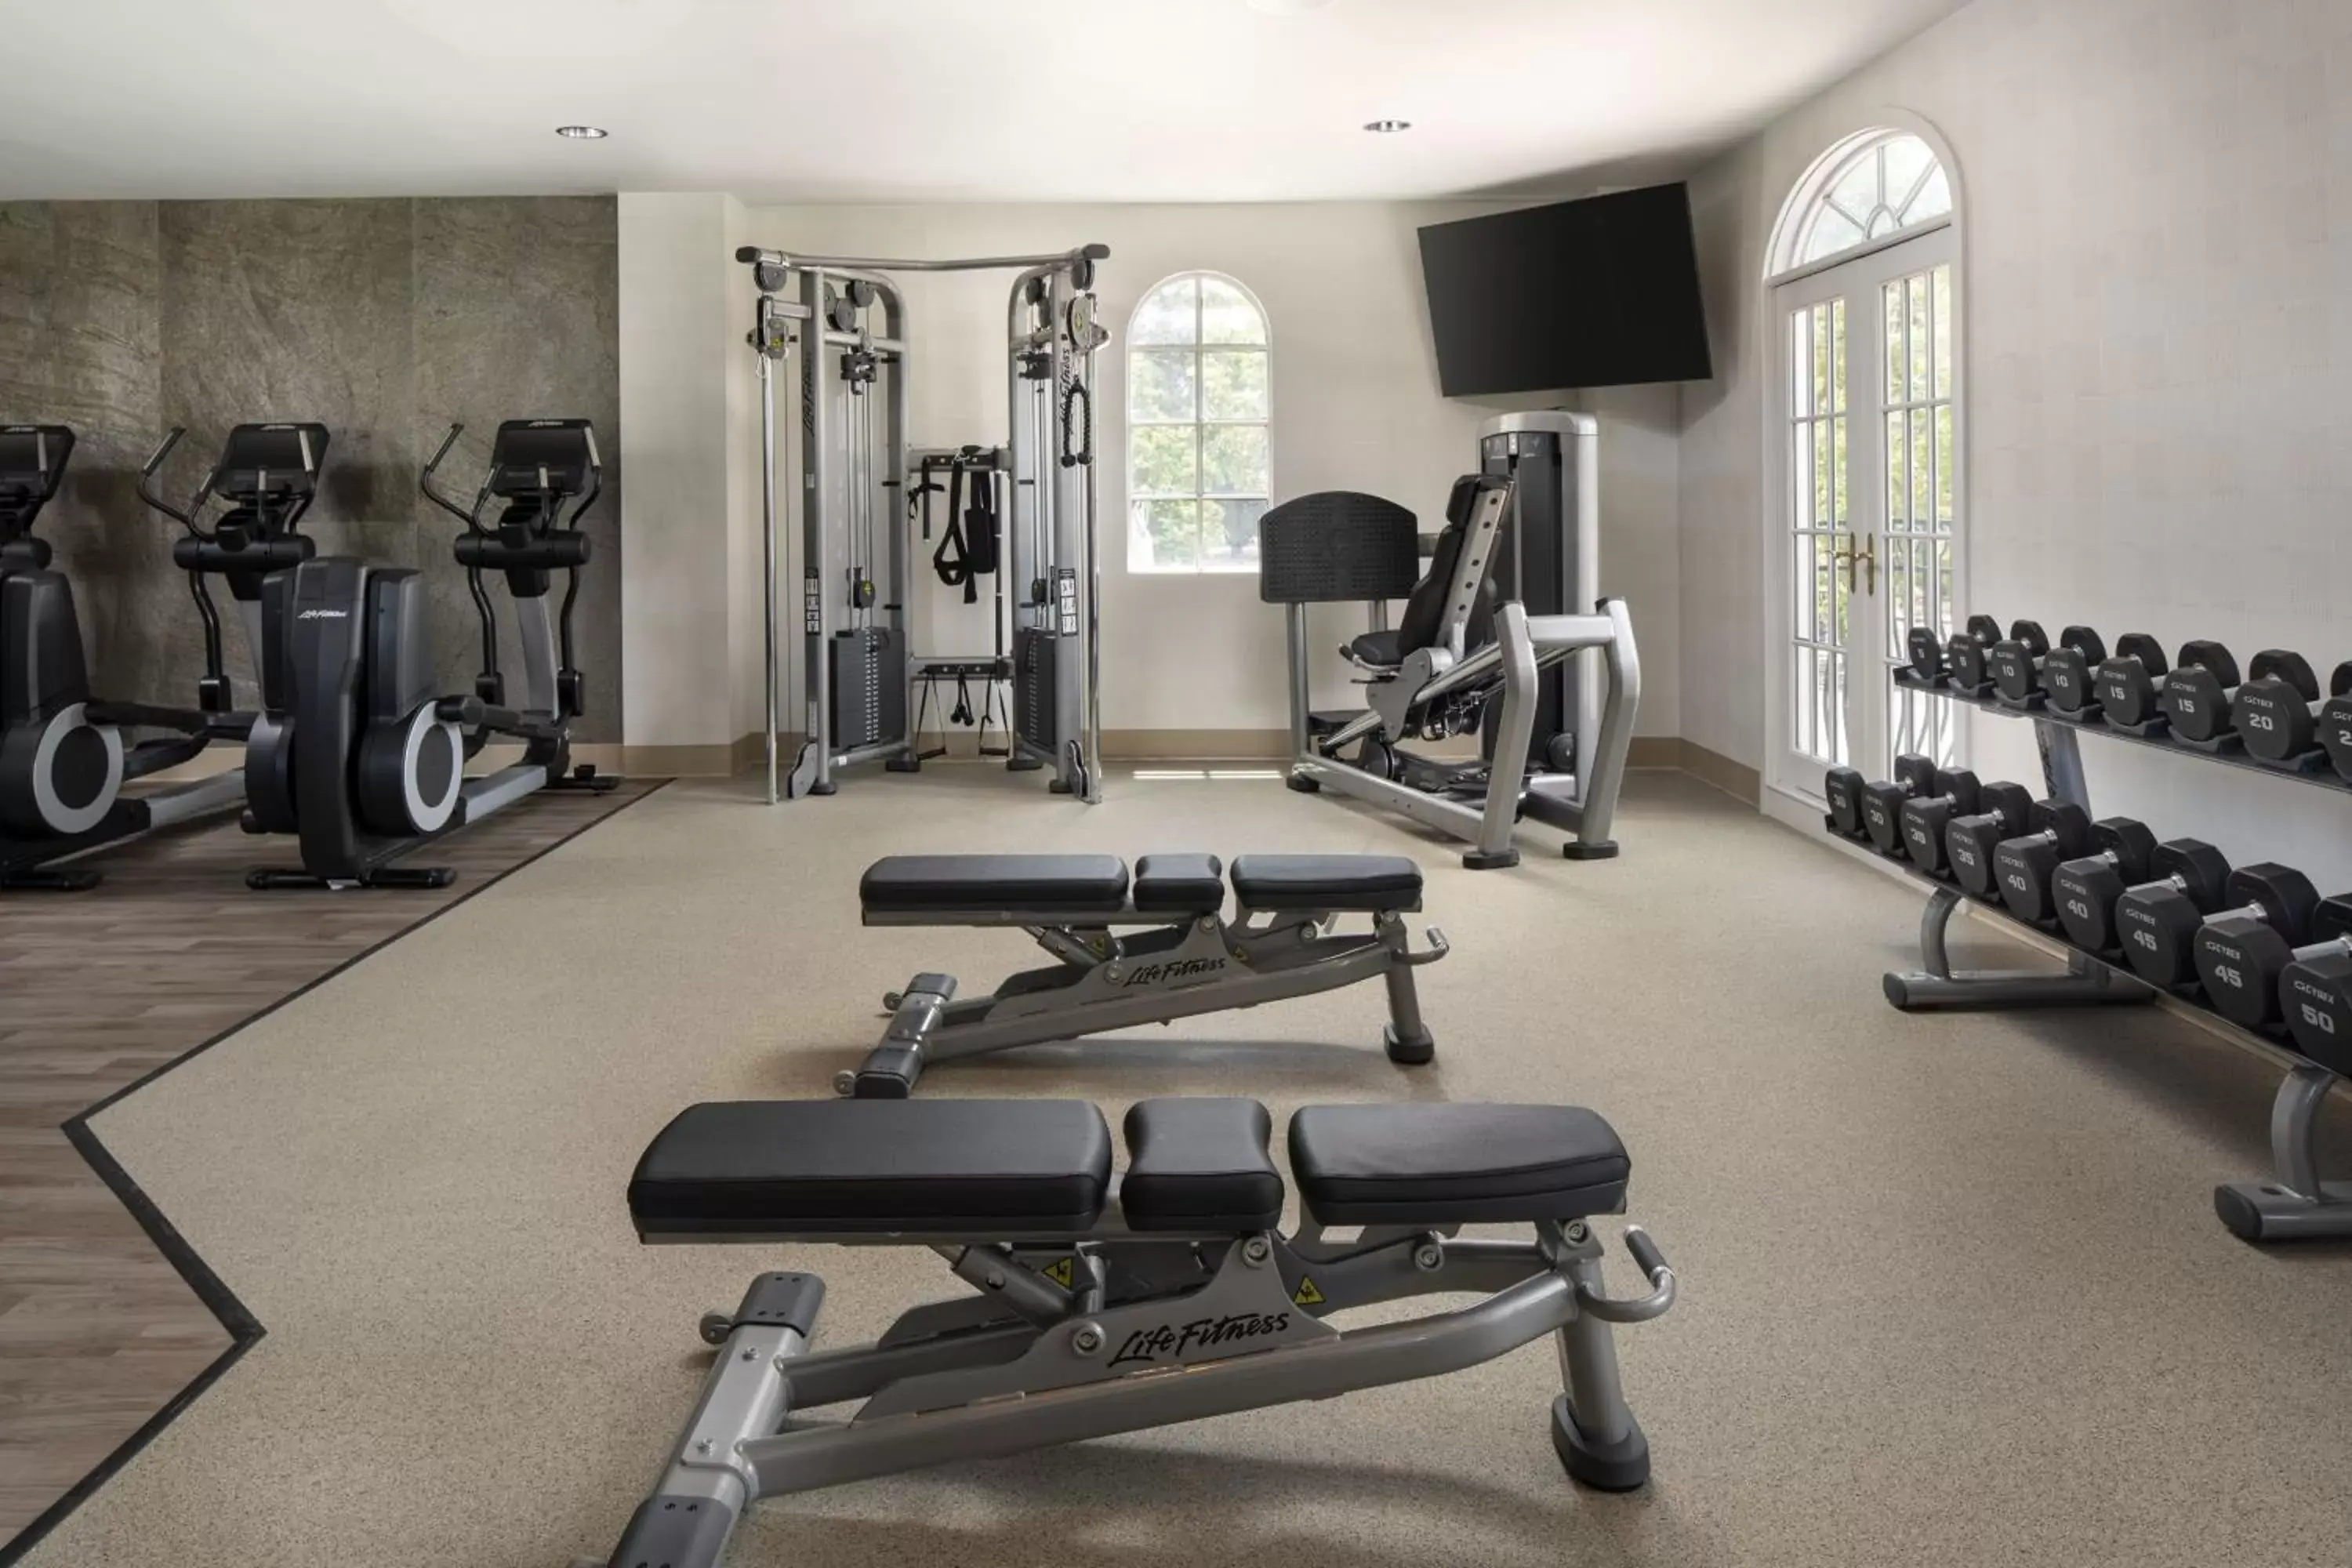 Fitness centre/facilities, Fitness Center/Facilities in The Westin Palo Alto